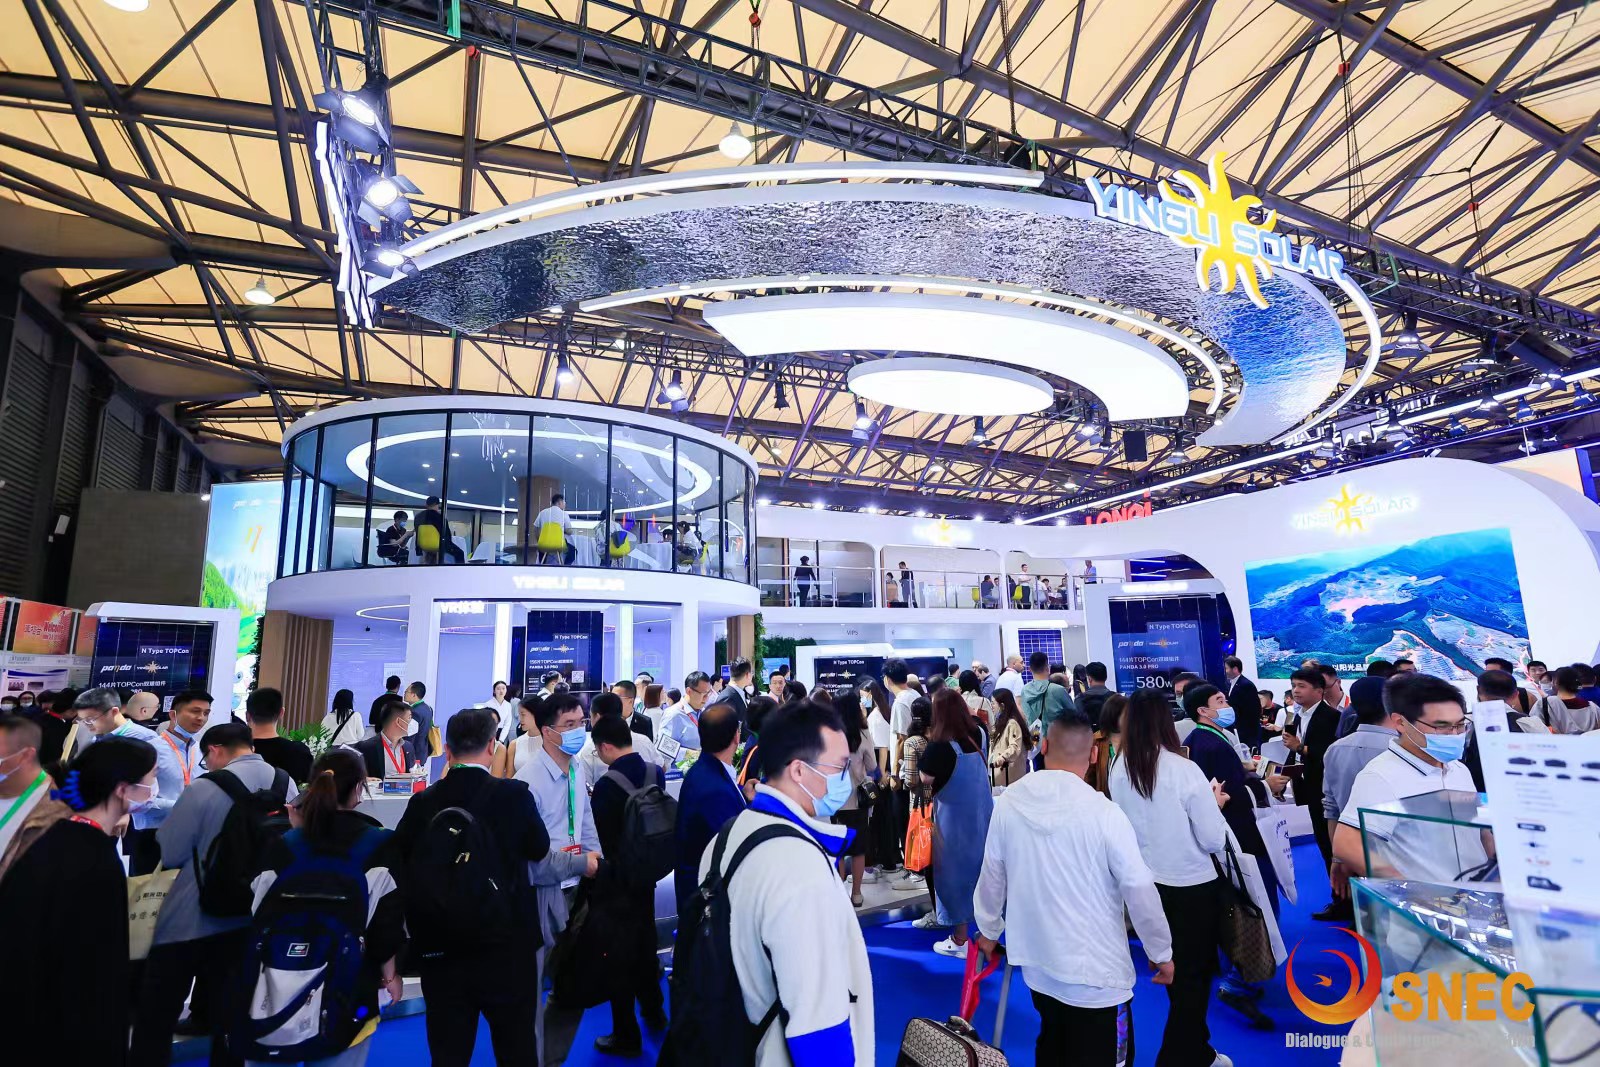 2023snec上海国际储能展会、上海锂电池展会11月